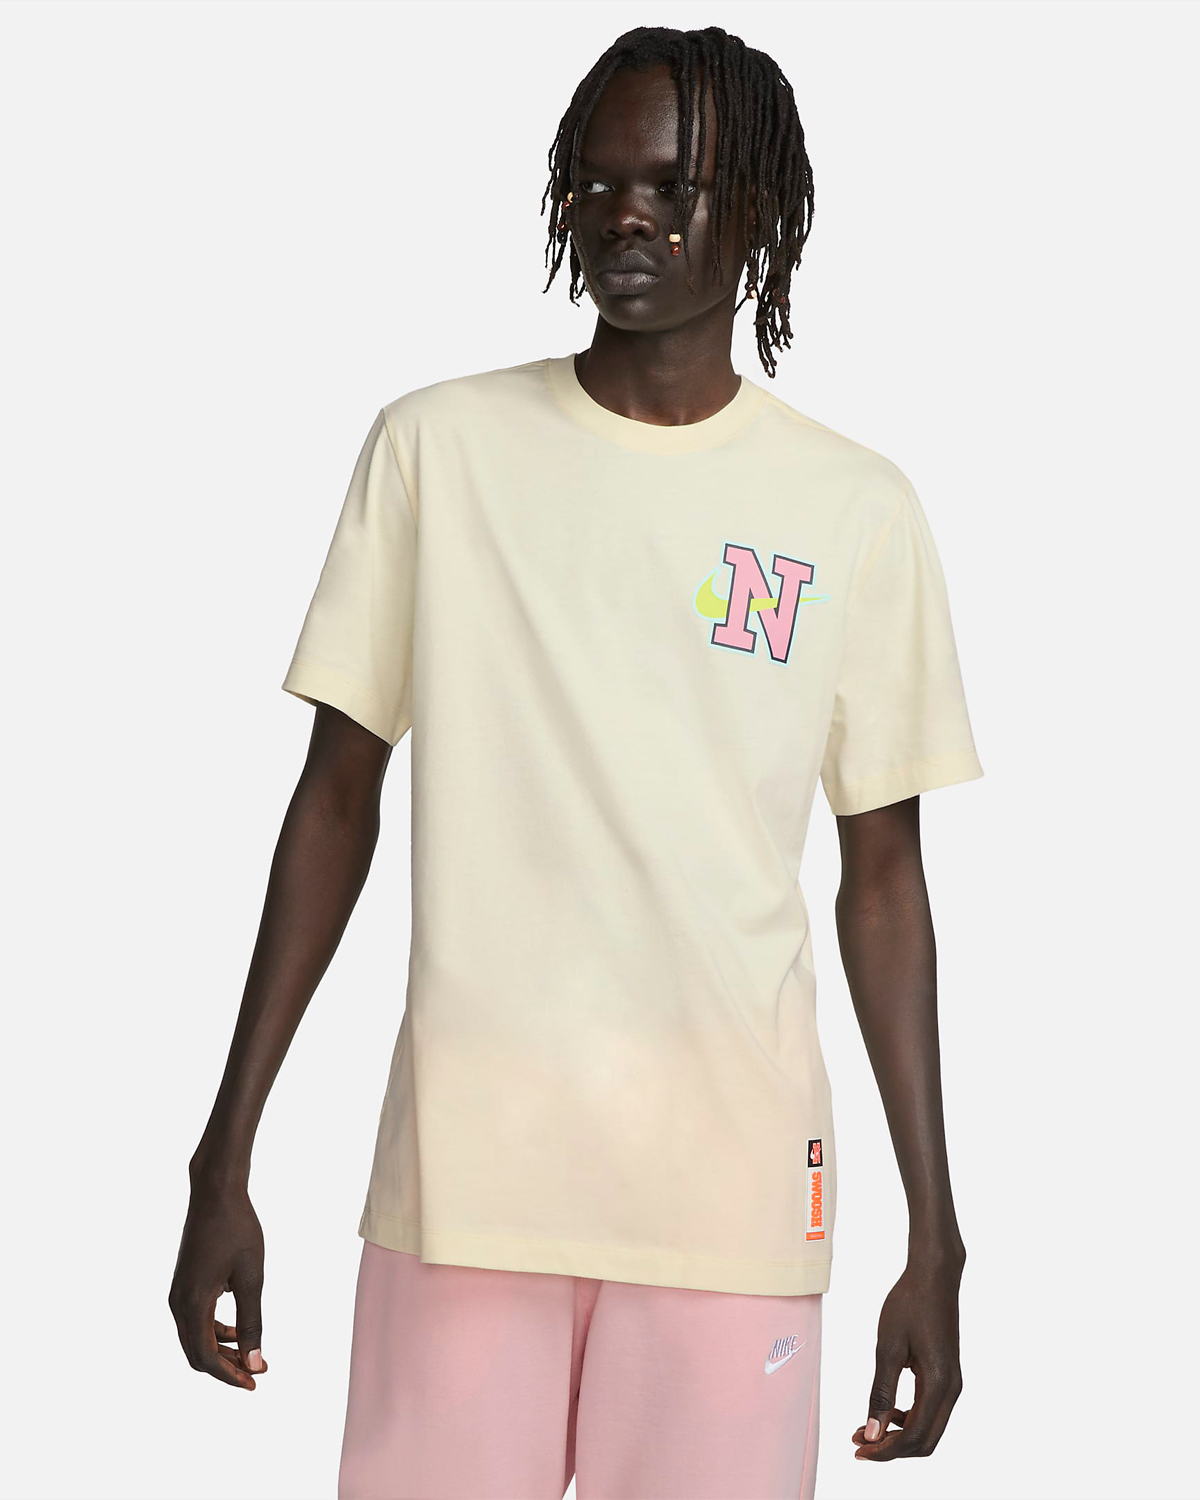 Nike-Sportswear-T-Shirt-Coconut-Milk-Pink-1